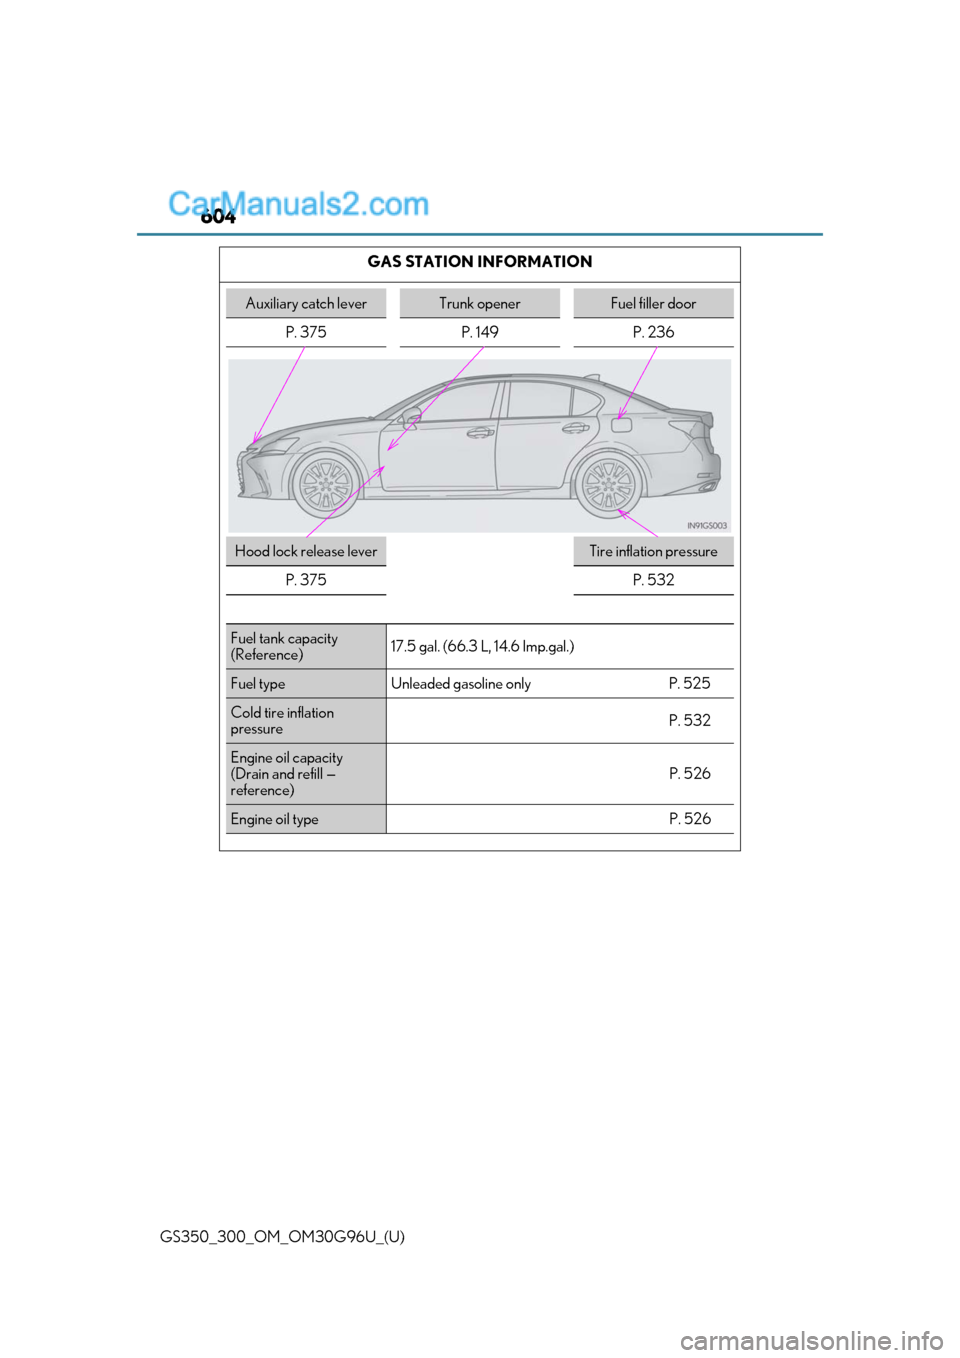 Lexus GS300 2019 Repair Manual 604
GS350_300_OM_OM30G96U_(U)GAS STATION INFORMATION
Auxiliary catch leverTrunk openerFuel filler door
P. 375 P. 149 P. 236
Hood lock release leverTire inflation pressure
P. 375
P. 532
Fuel tank capac